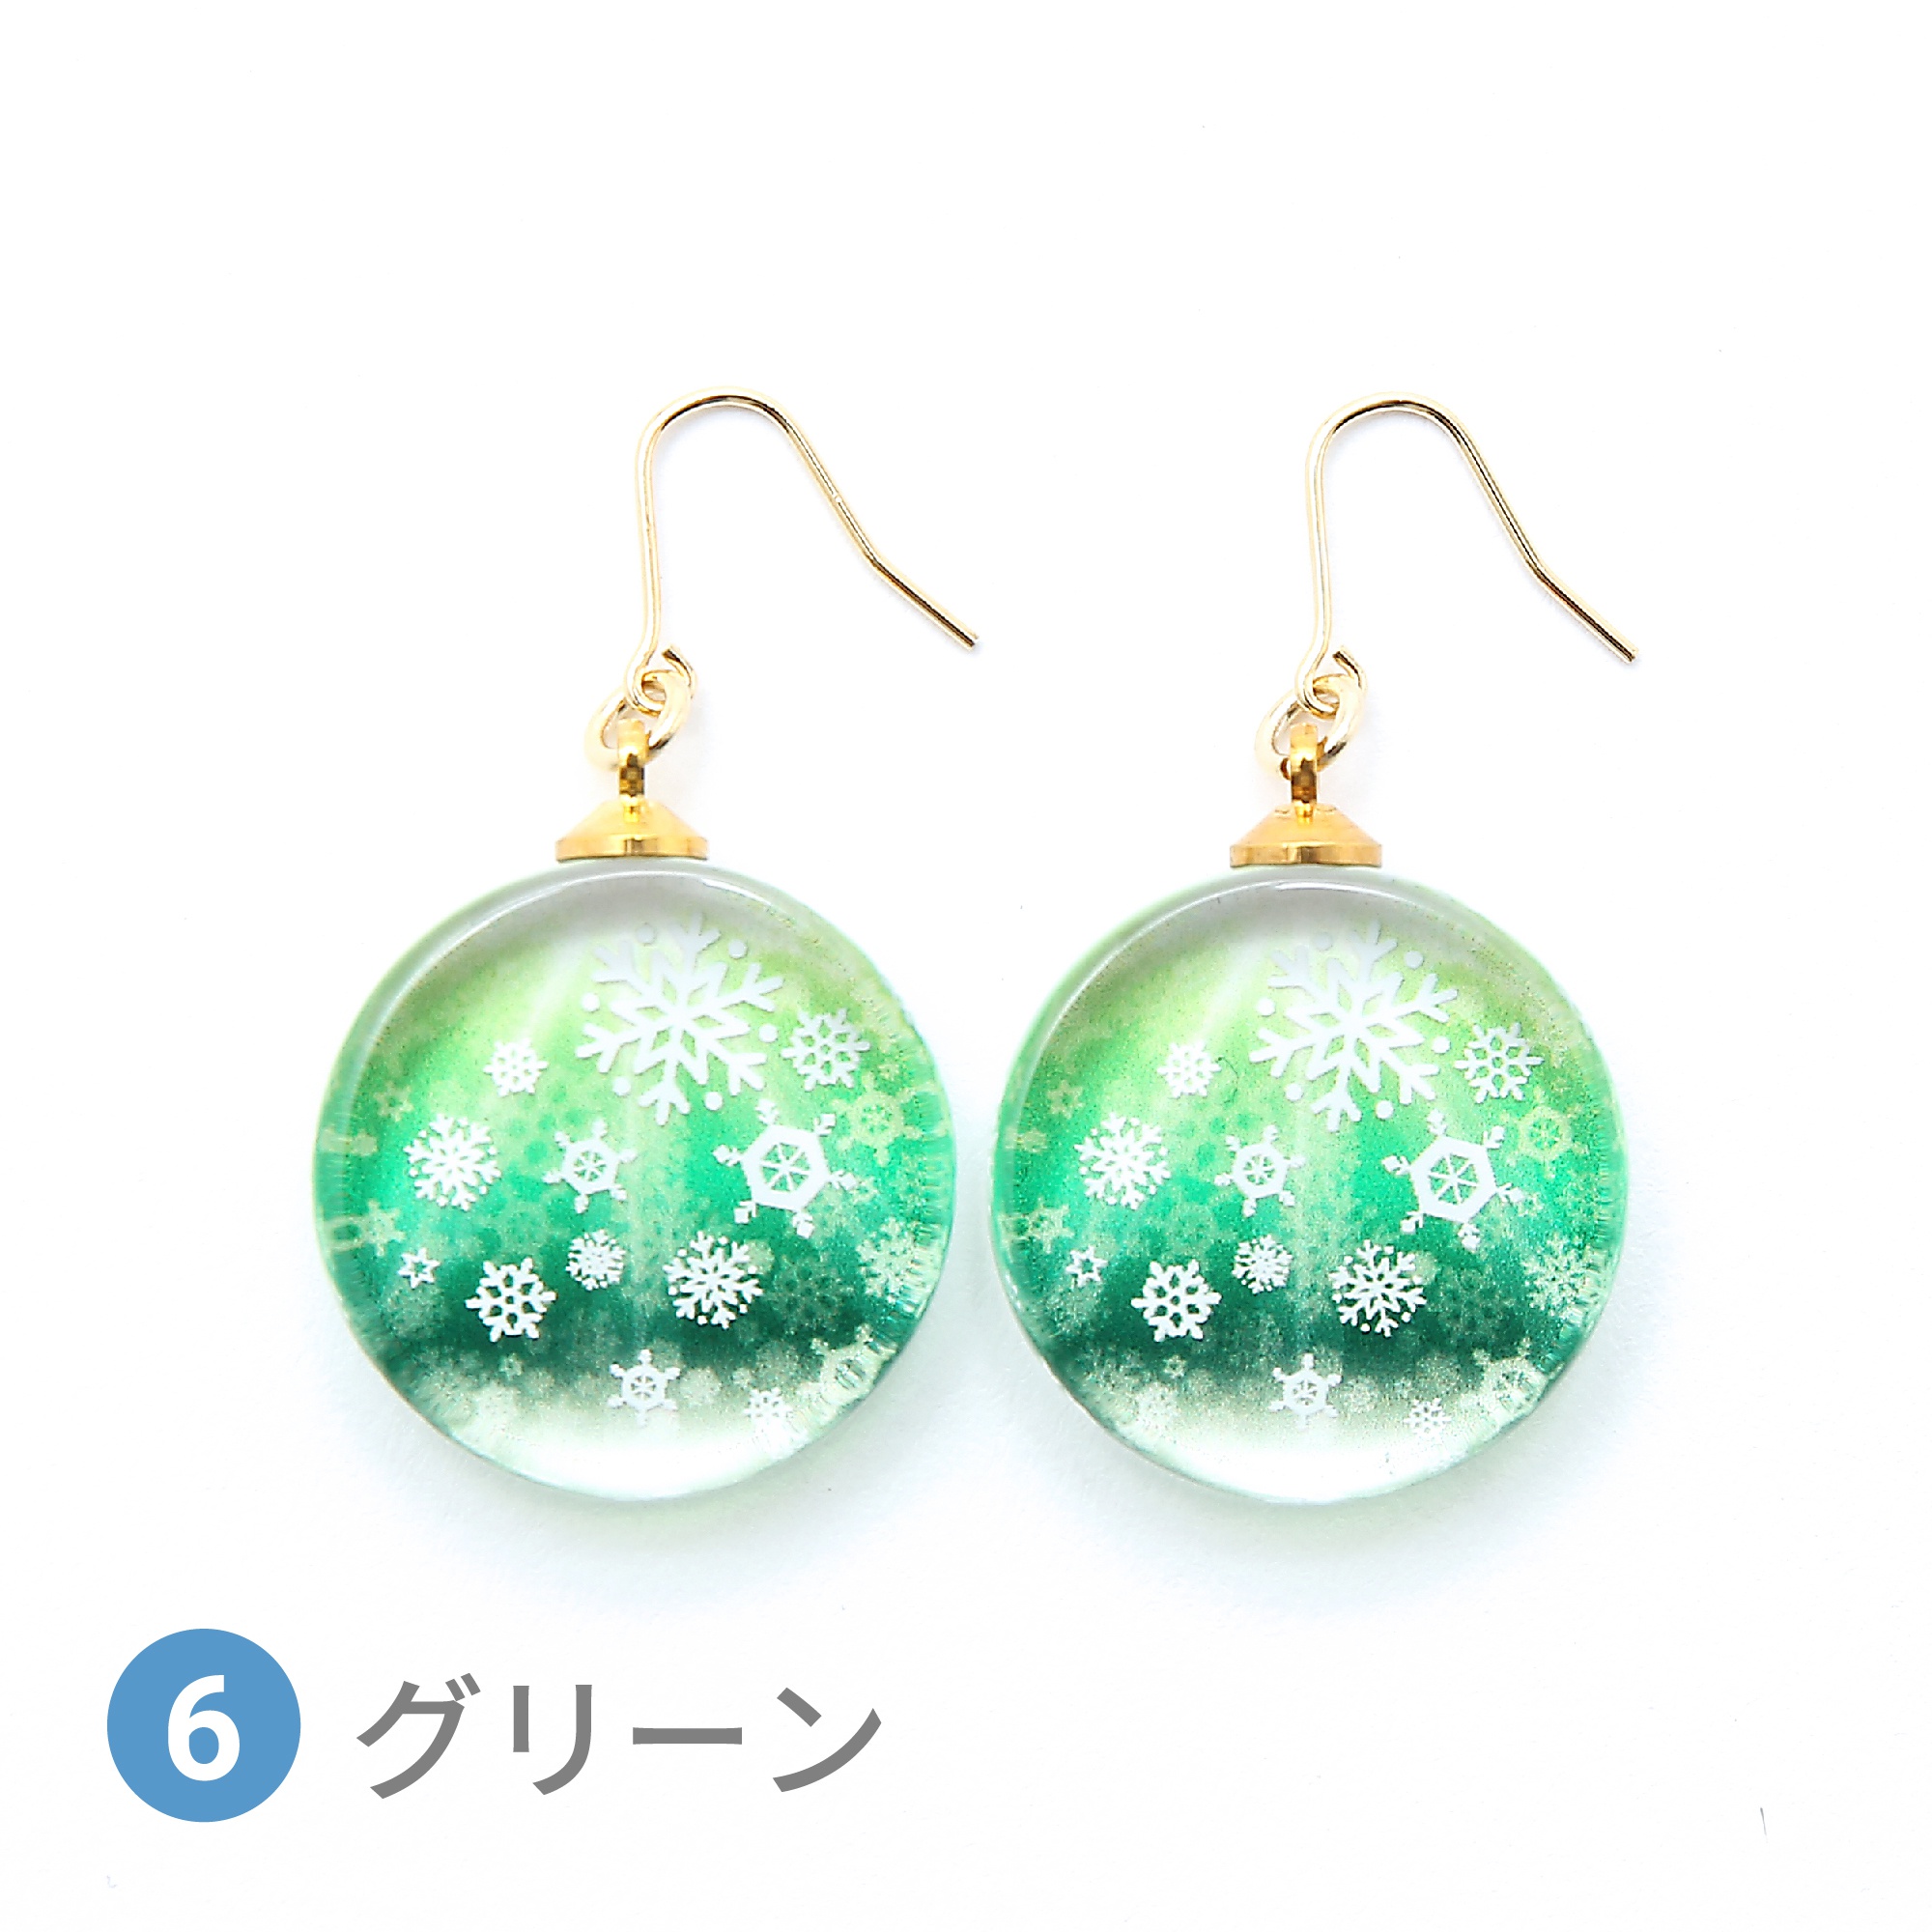 Glass accessories Pierced Earring Shiny winter green round shape